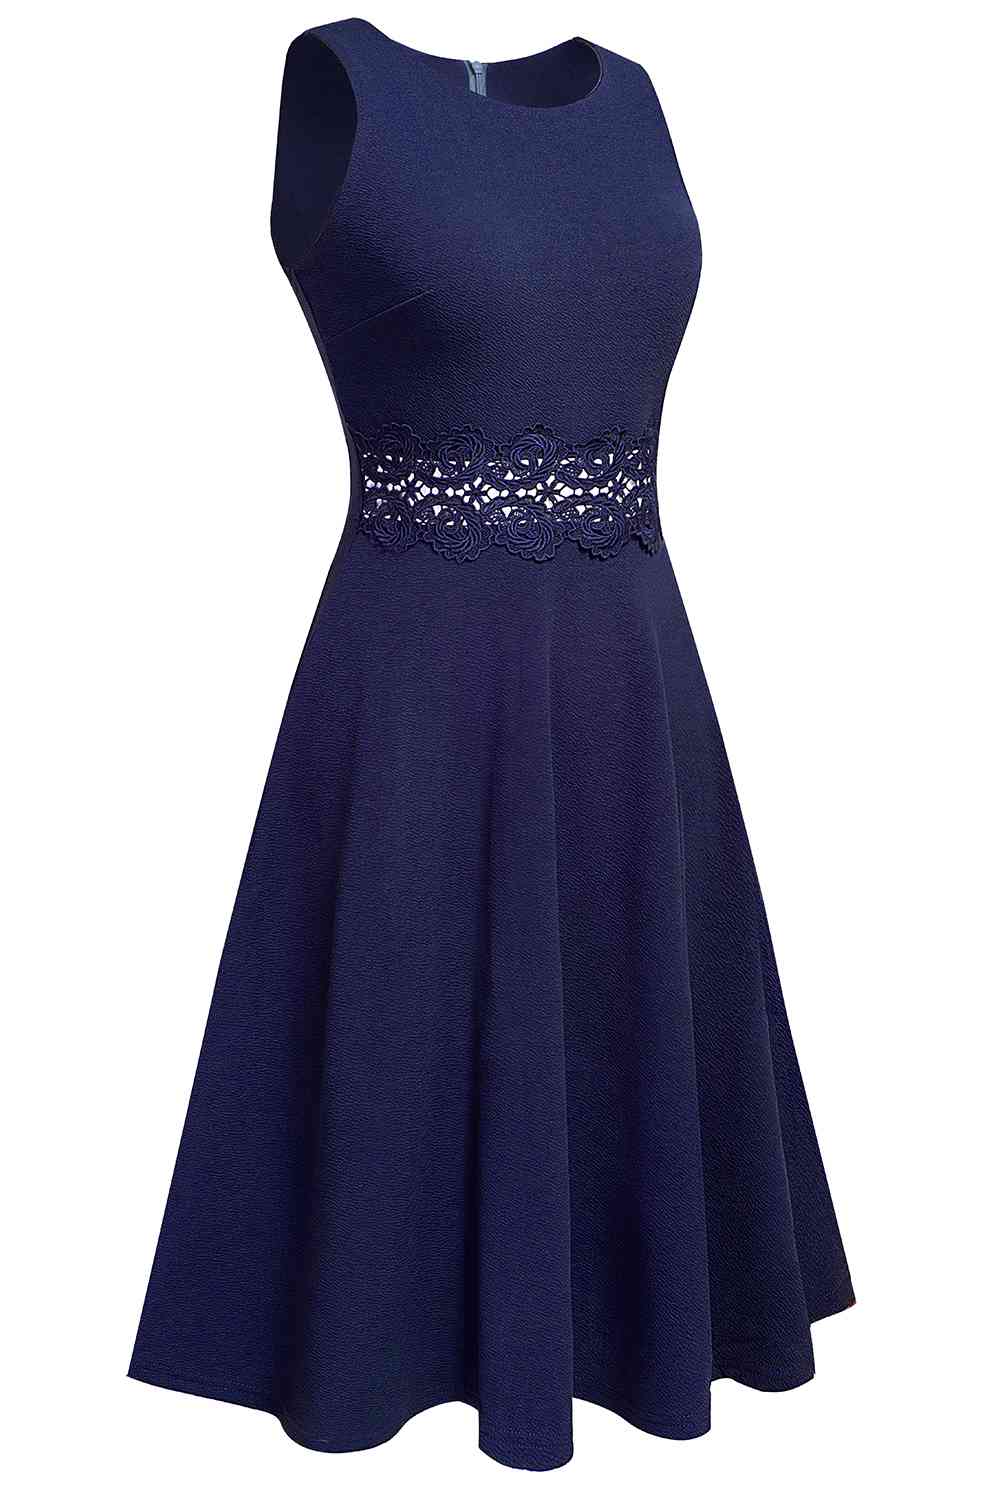 Round Neck Sleeveless Lace Trim Dress - All Dresses - Dresses - 14 - 2024